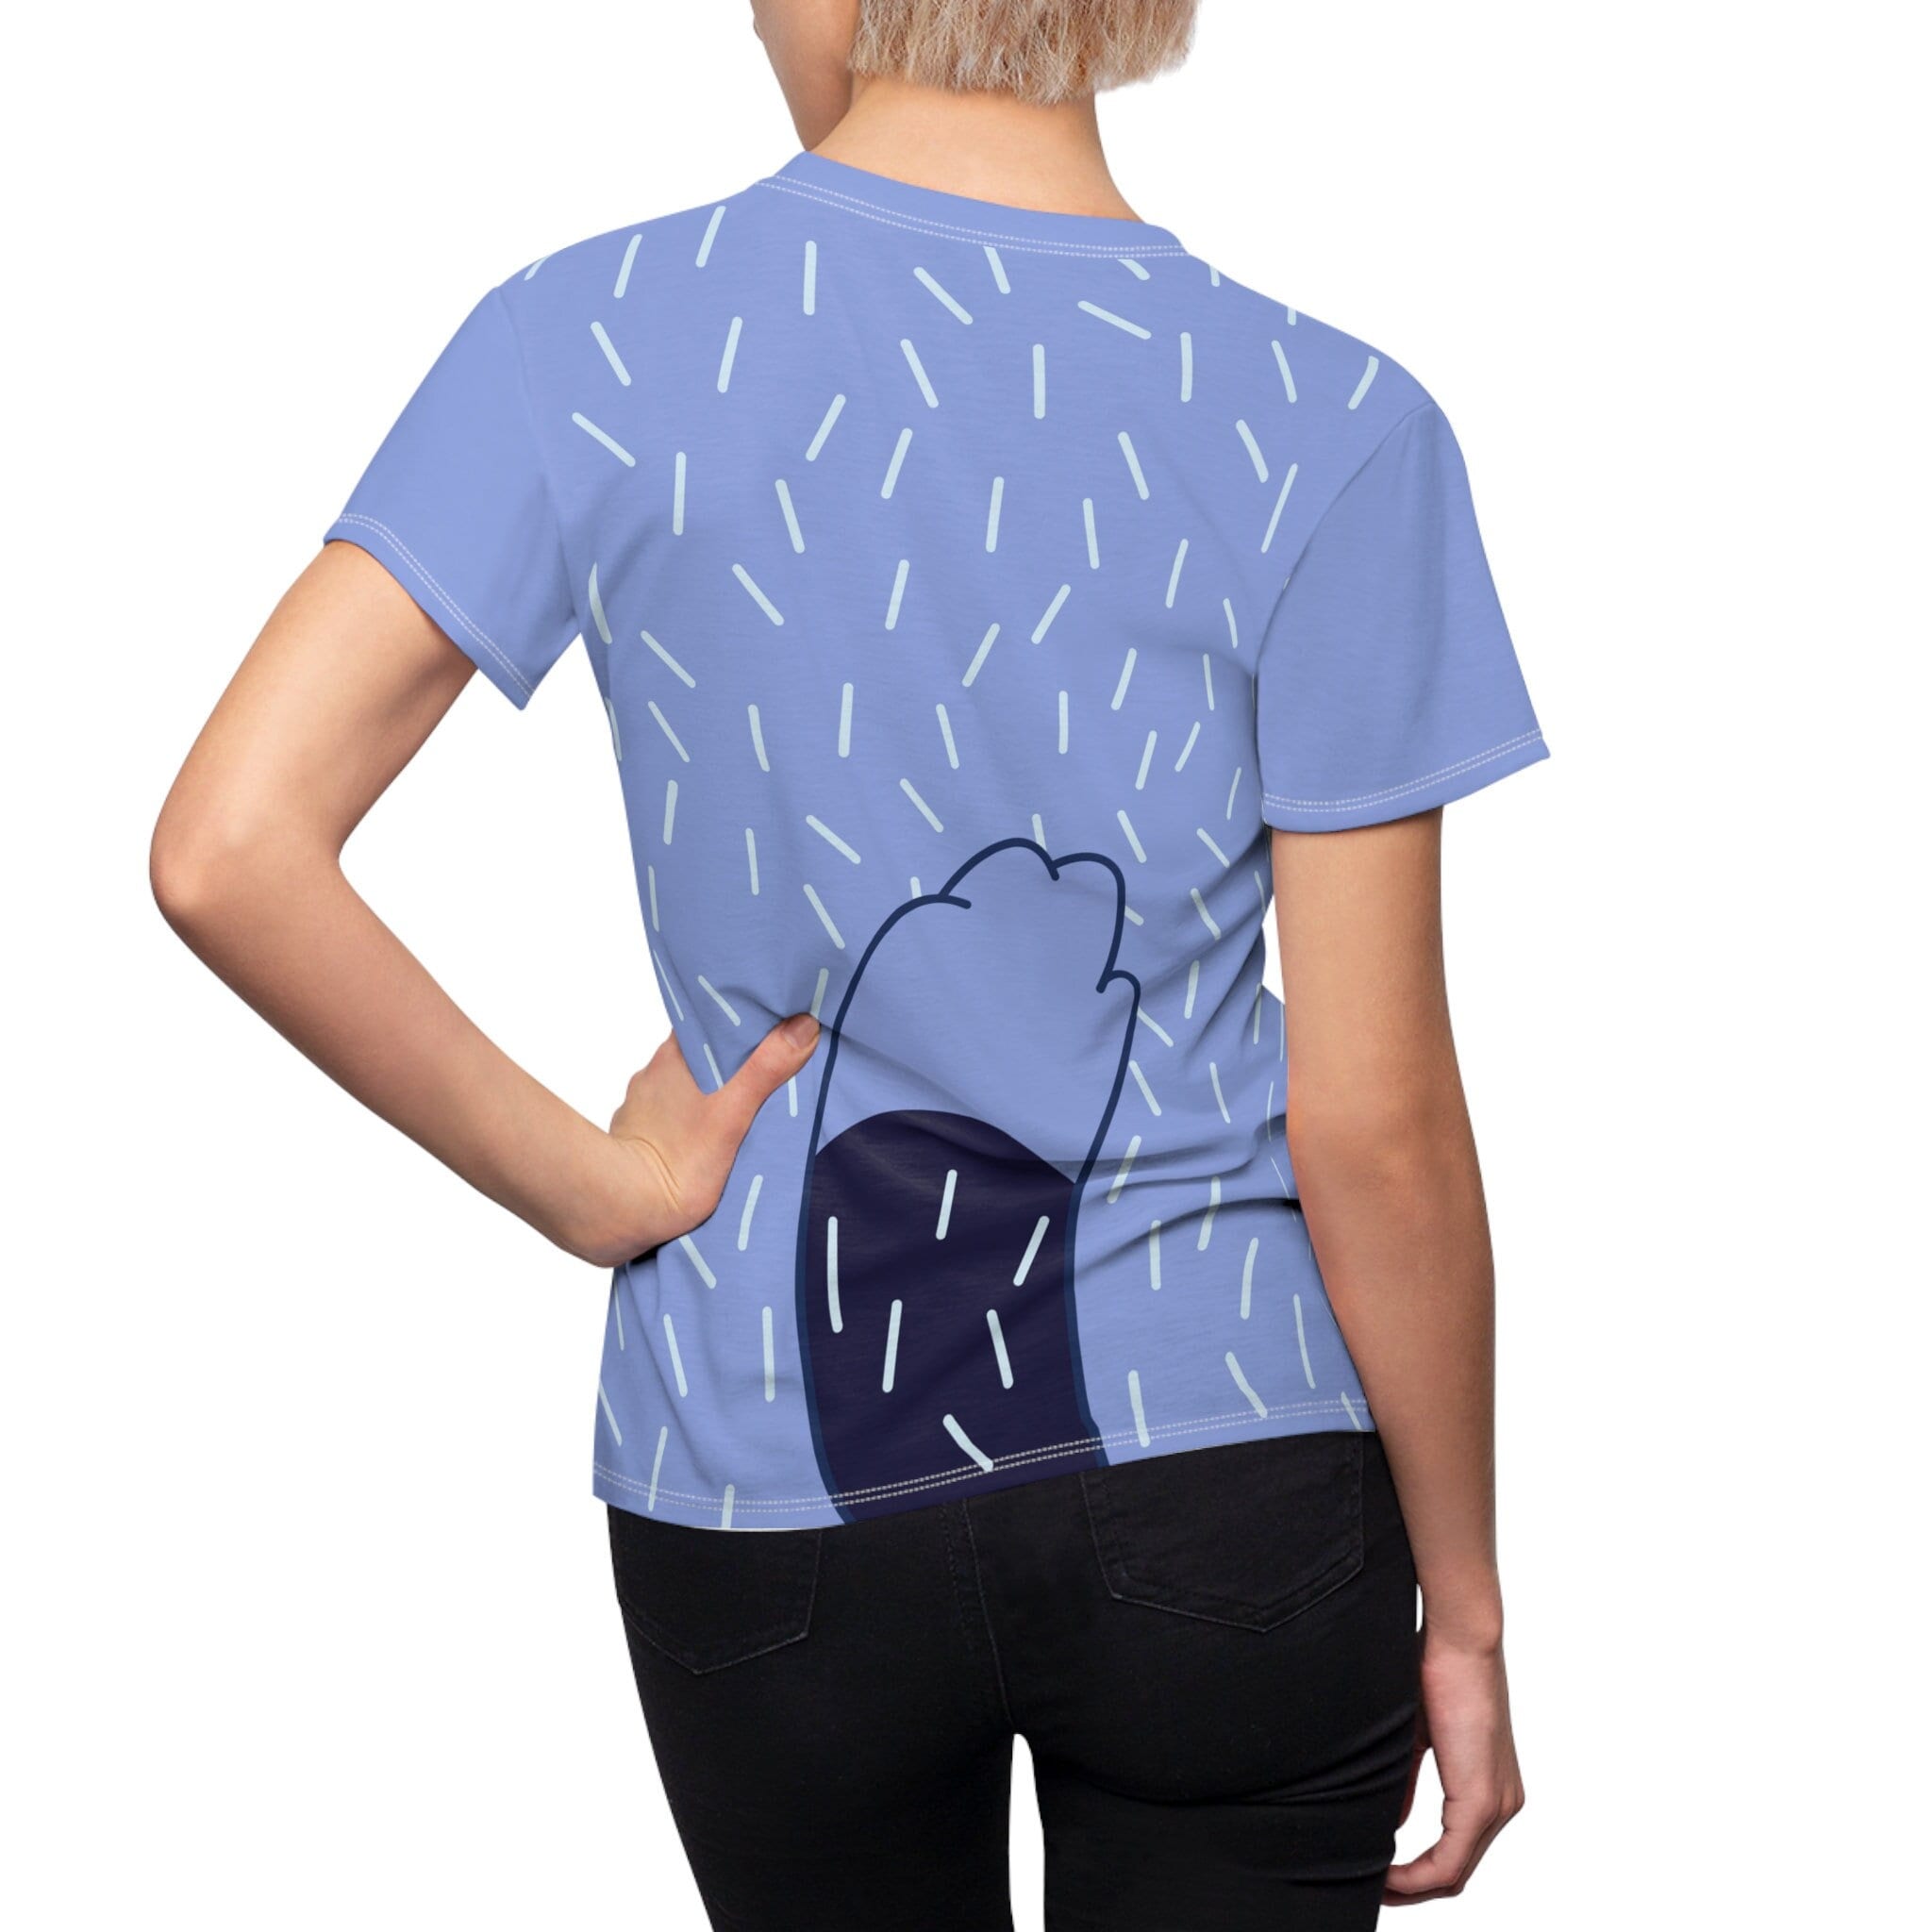 Bluey Inspired Mum Chilli List of Nicknames Unisex T-shirt Gift